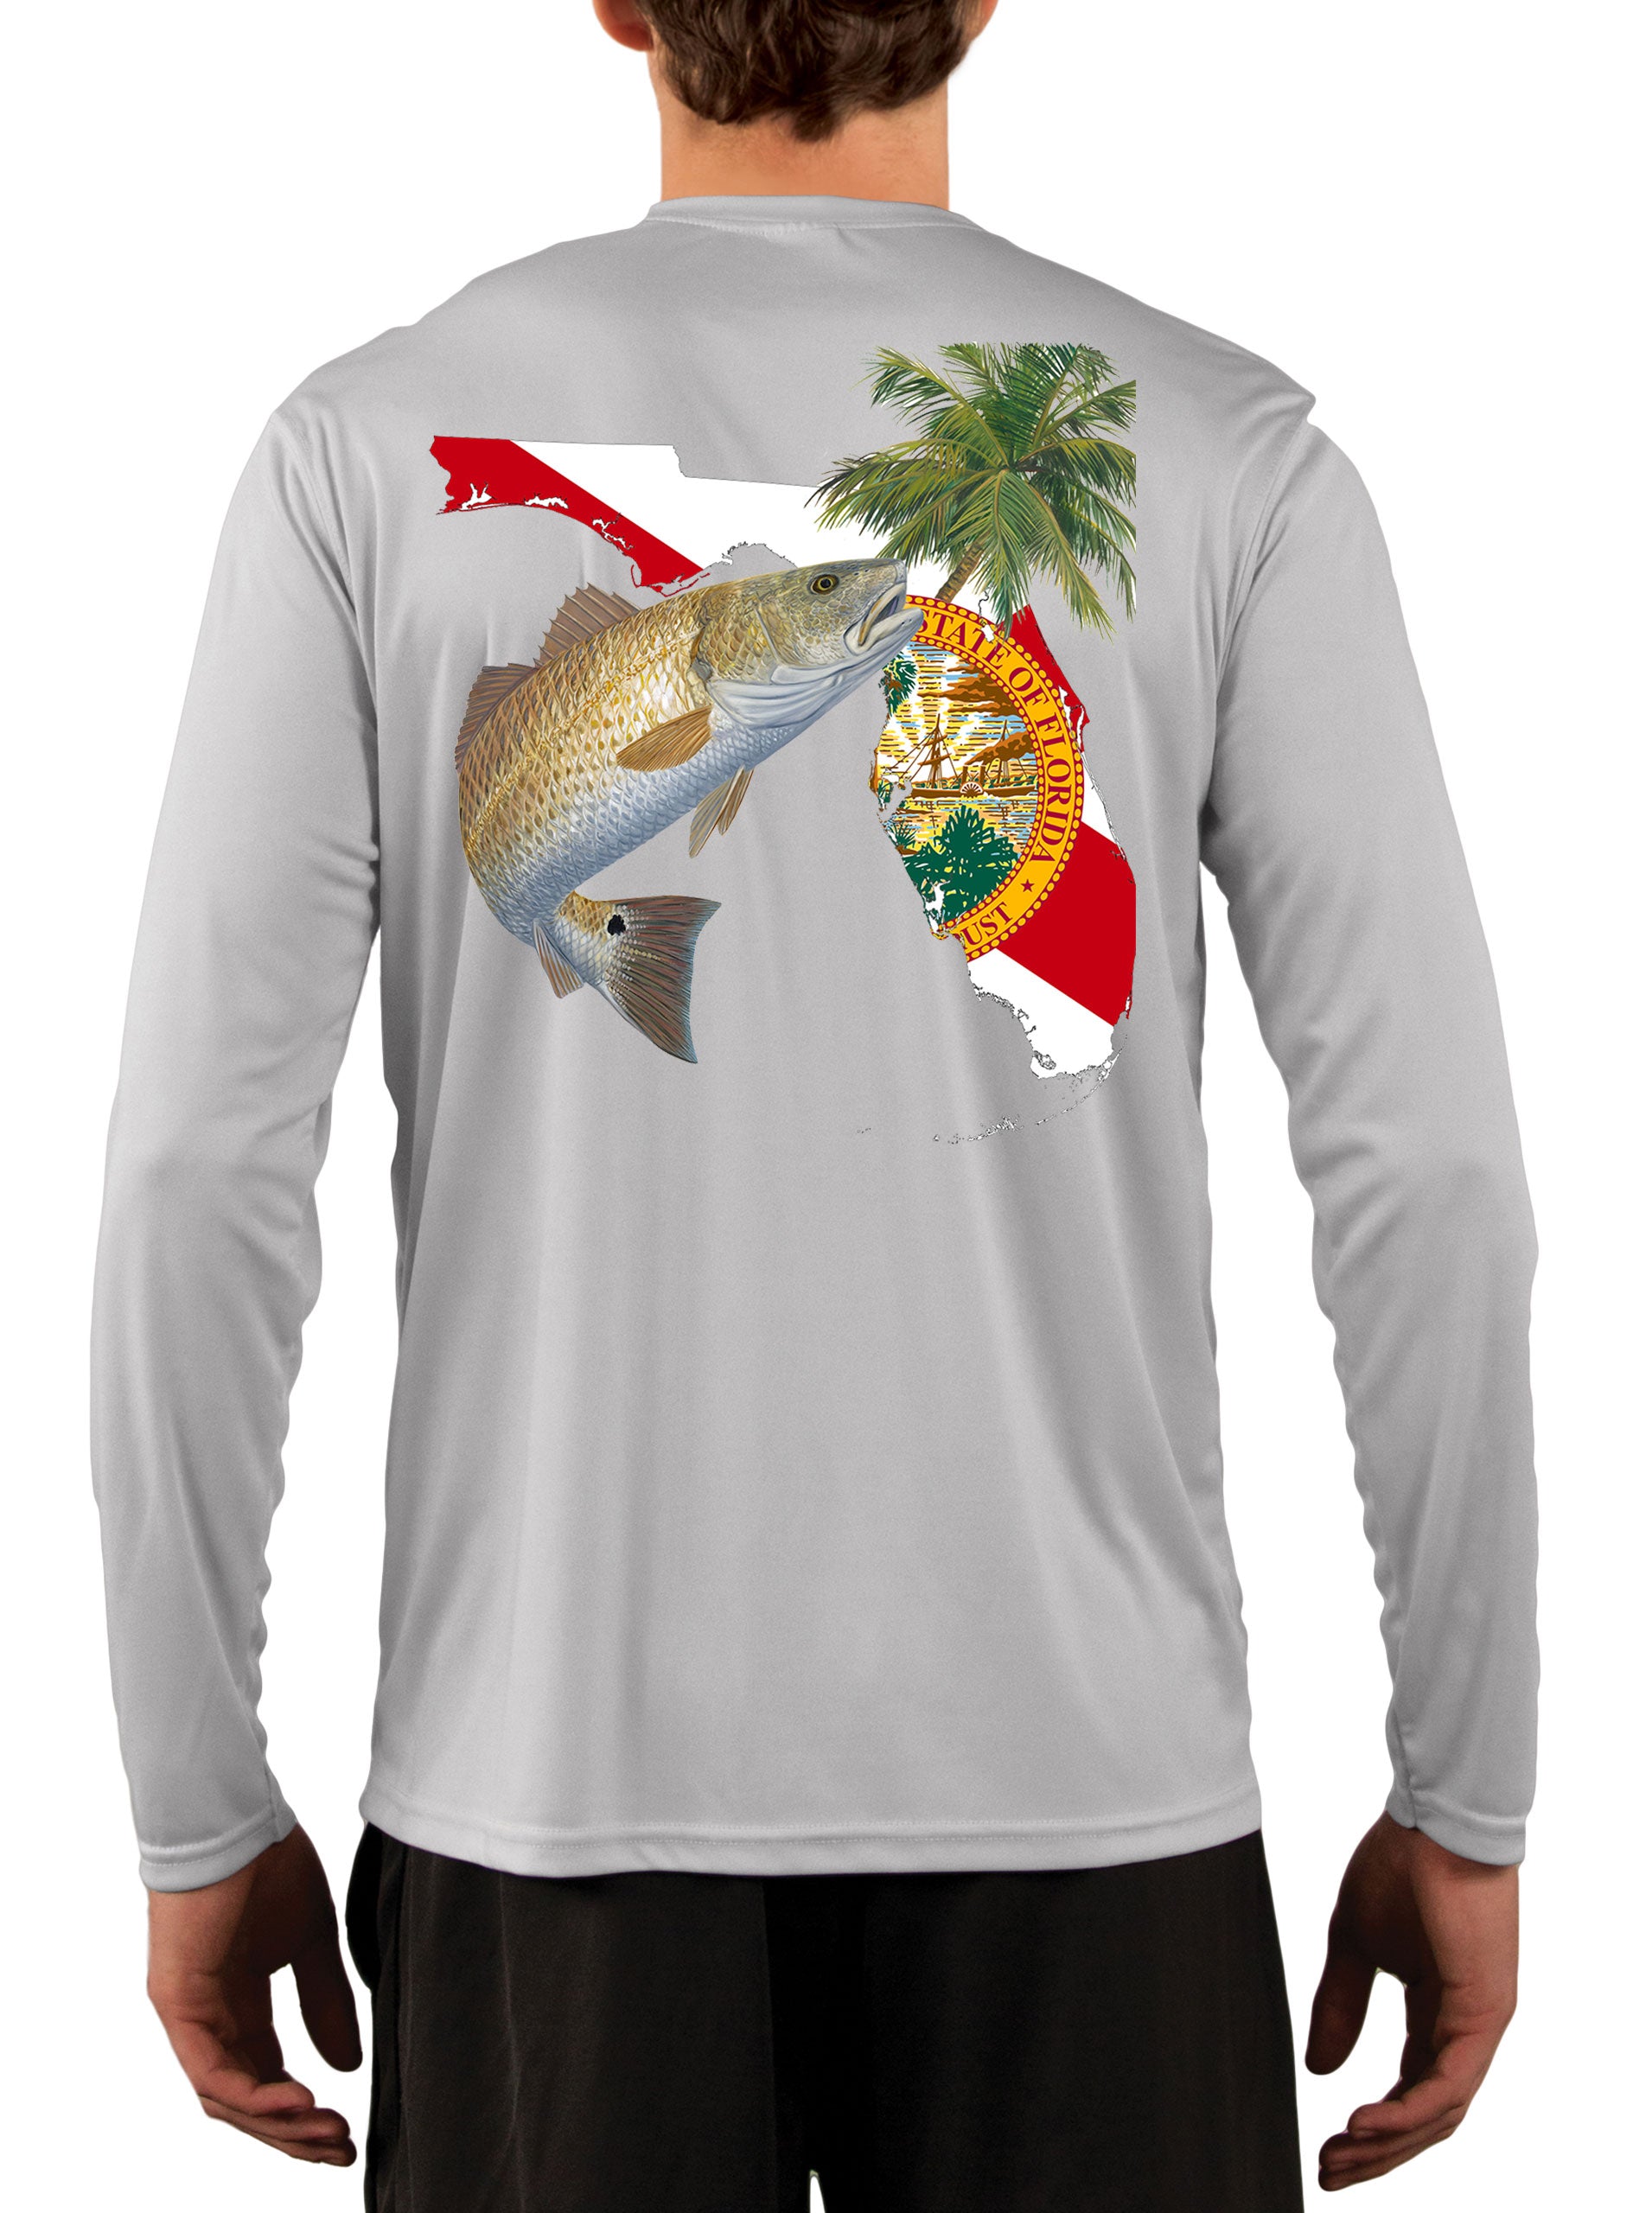 [NEW ARTWORK] Redfish Florida Fishing Shirt with Florida State Flag Sl